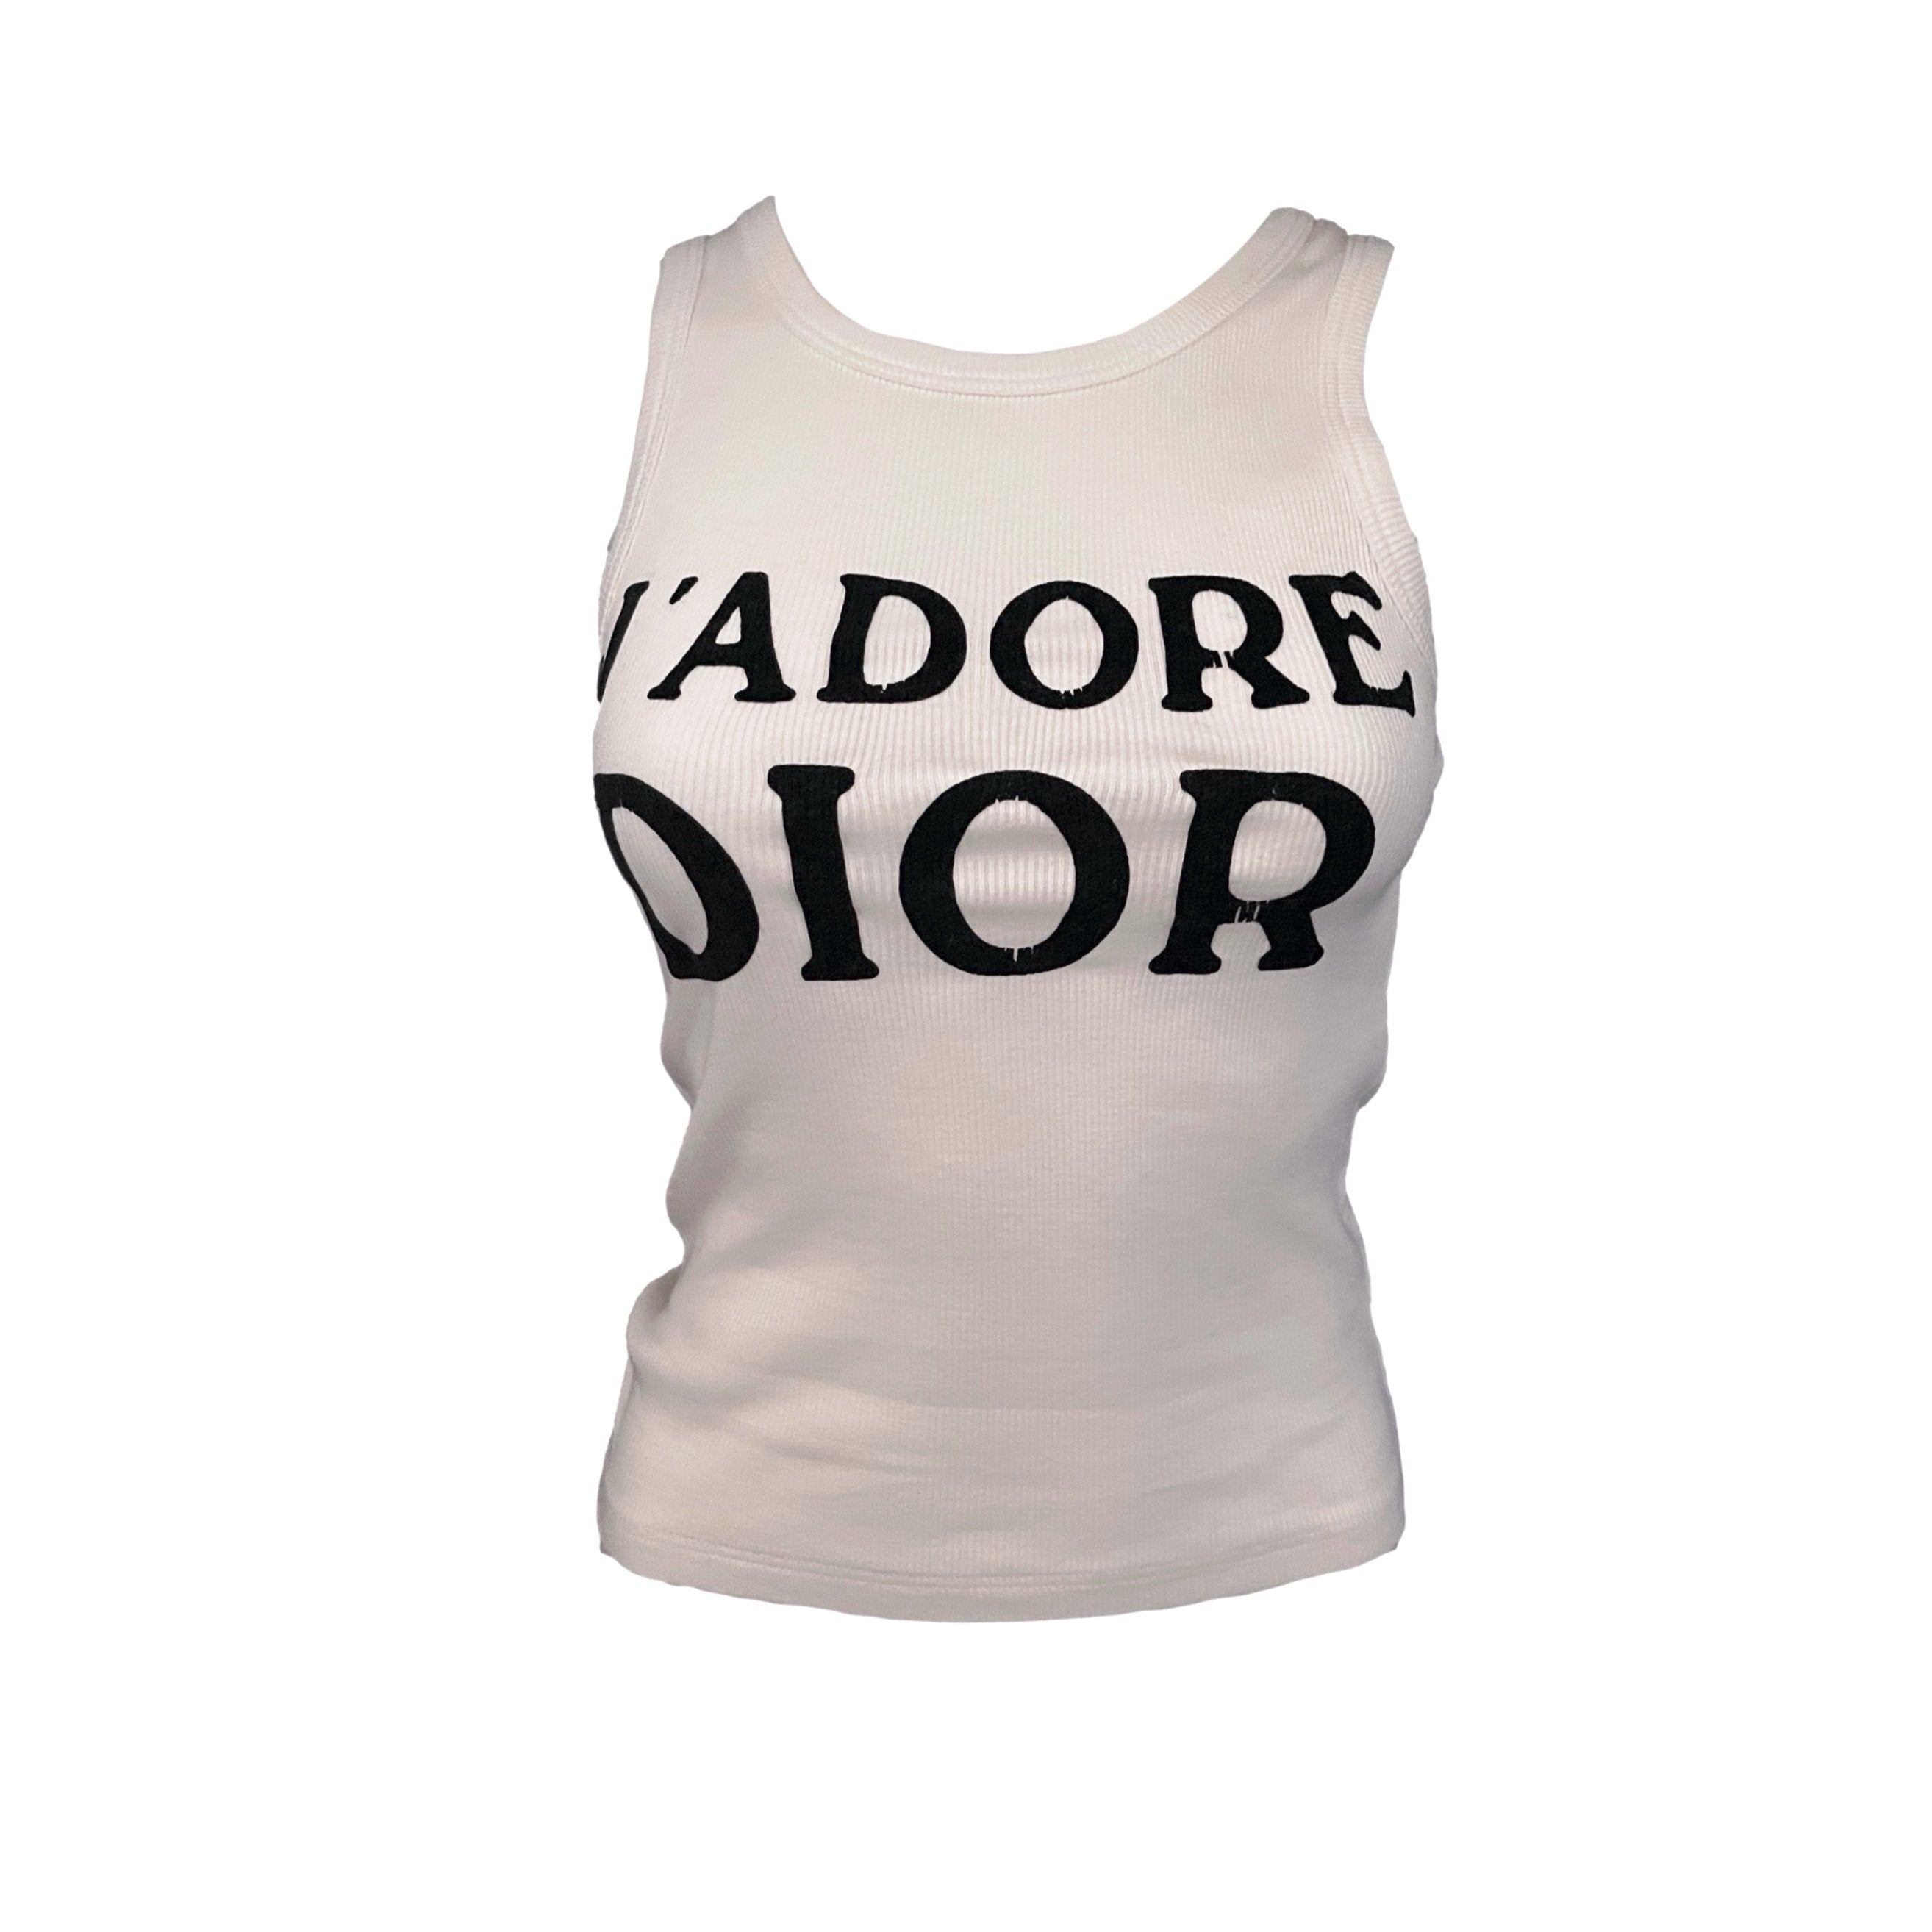 Dior J'adore White Ribbed Tank Top